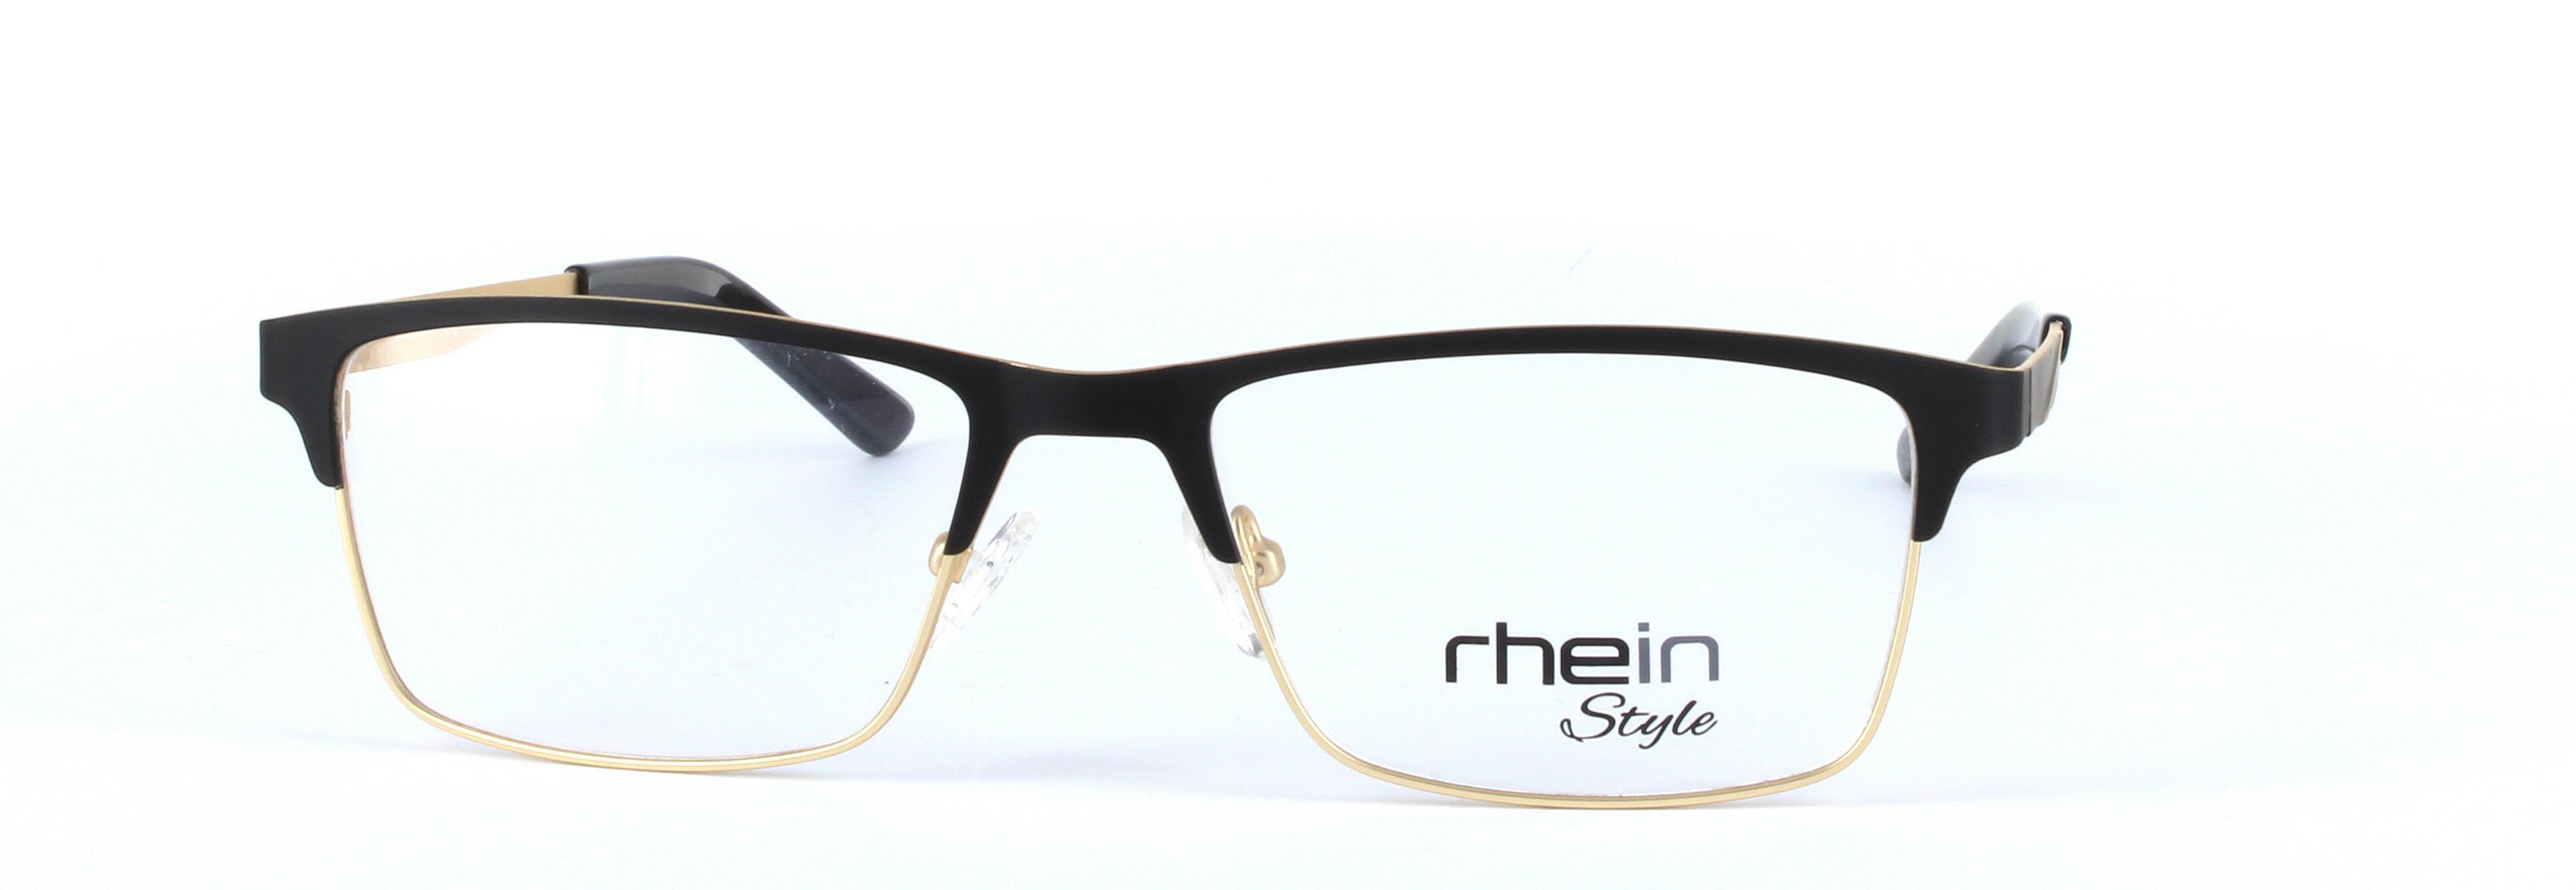 Codey Black Full Rim Oval Rectangular Metal Glasses - Image View 5